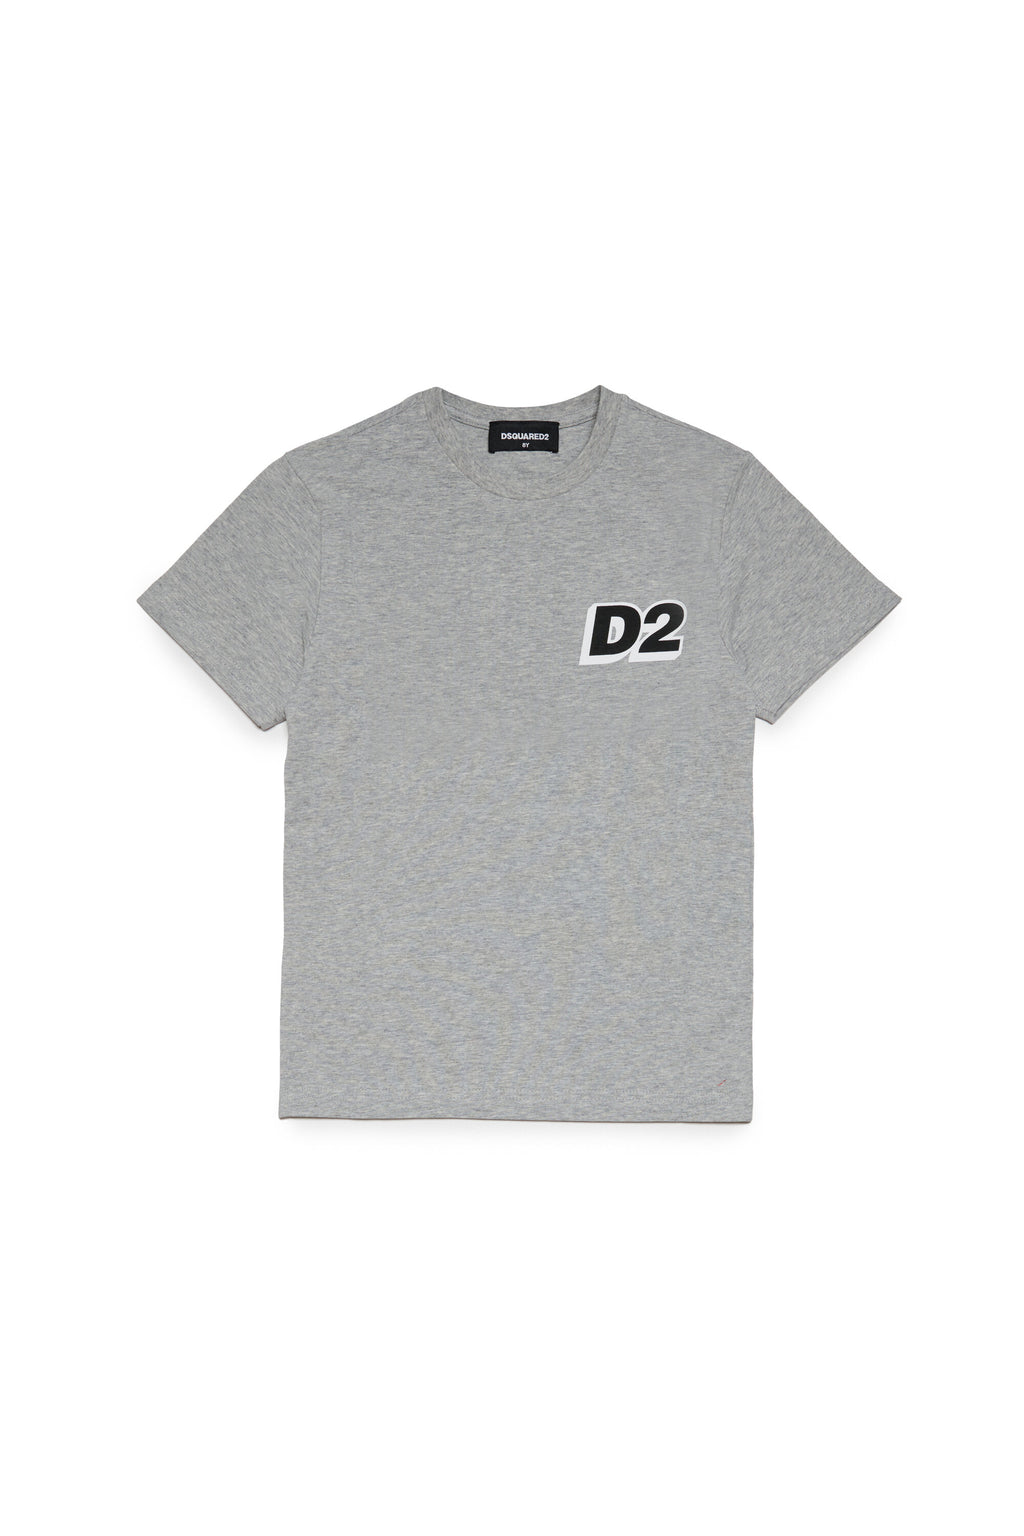 Mélange jersey loungewear t-shirt with D2 logo